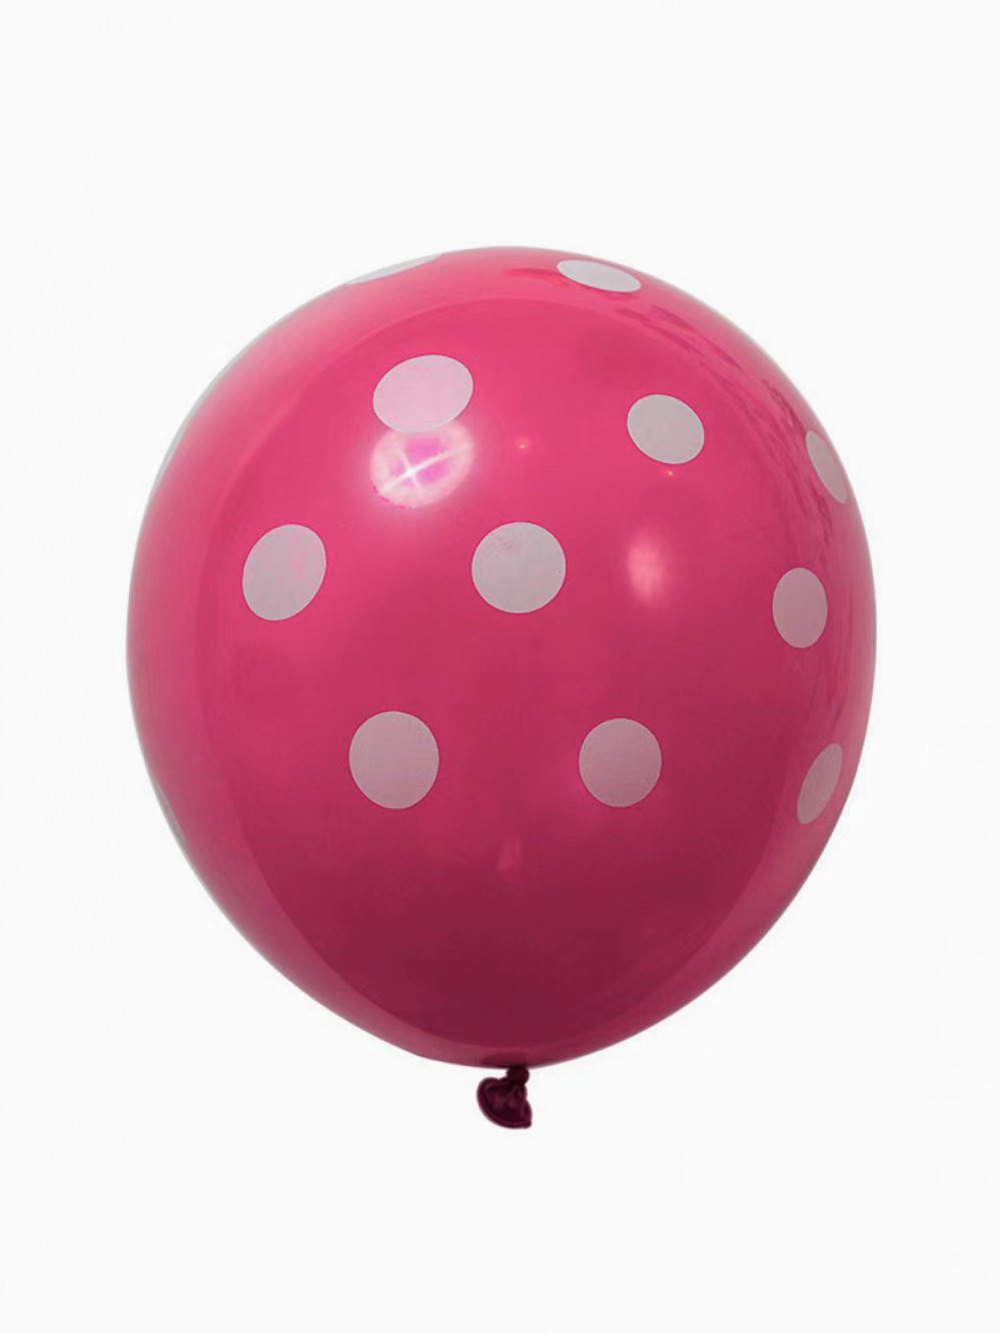 12 Inch Standard Polka Dot Balloons Hot Pink Balloon White Dot (10PCS)